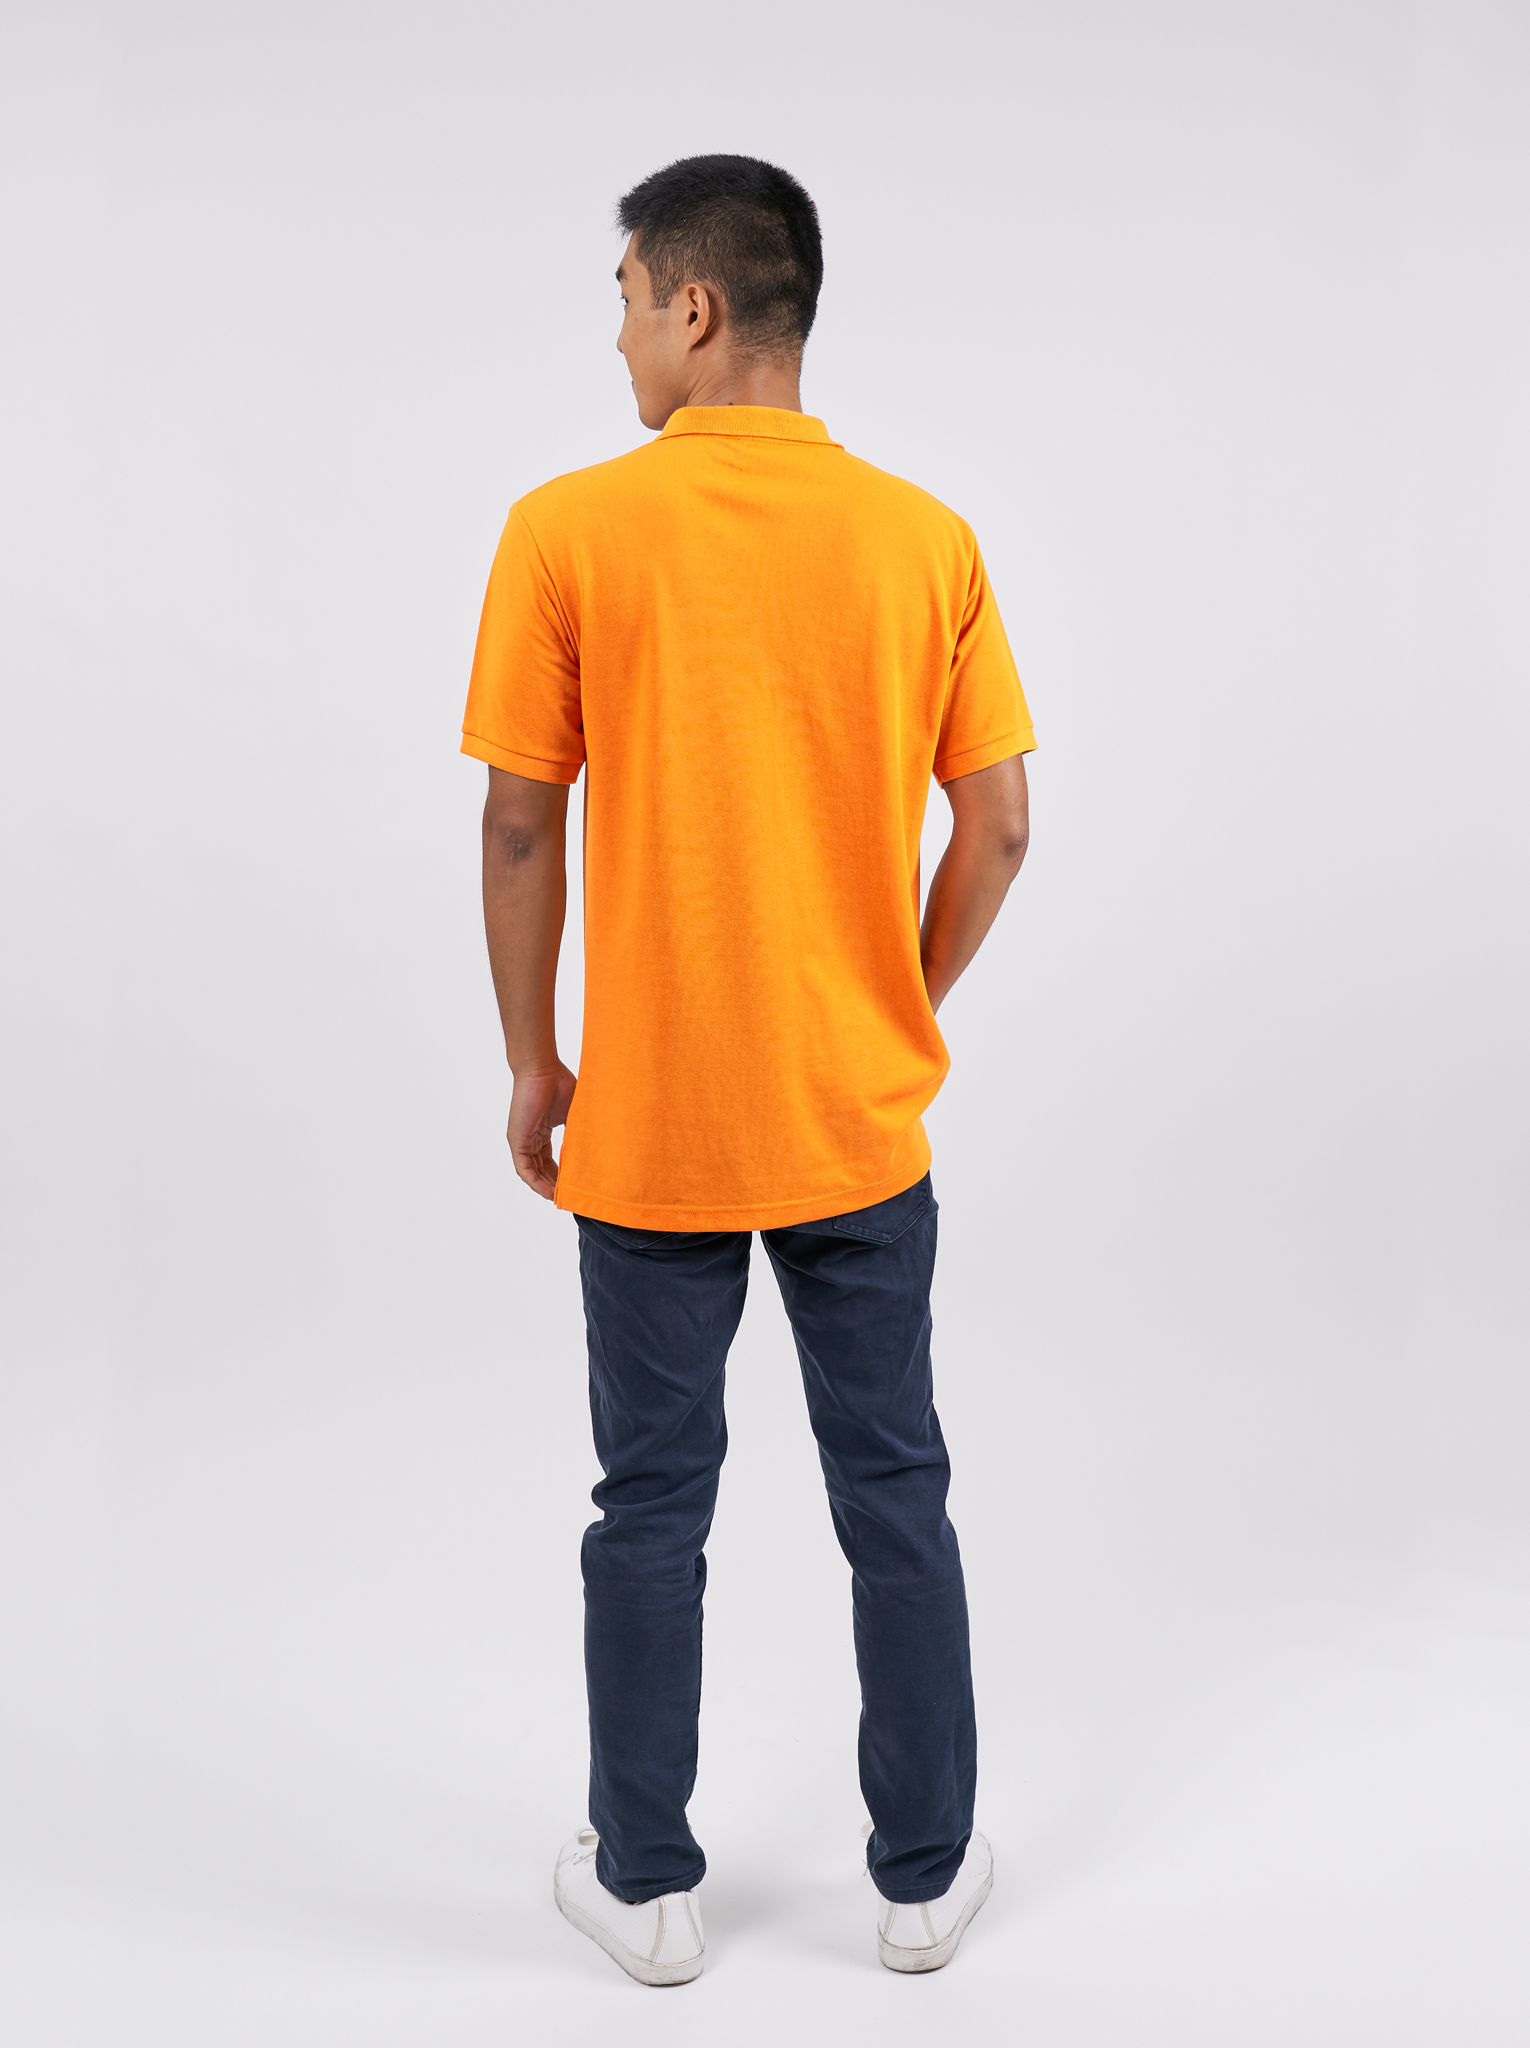 Polo Shirt เสื้อโปโล (Orange, สีส้ม)(Unisex)